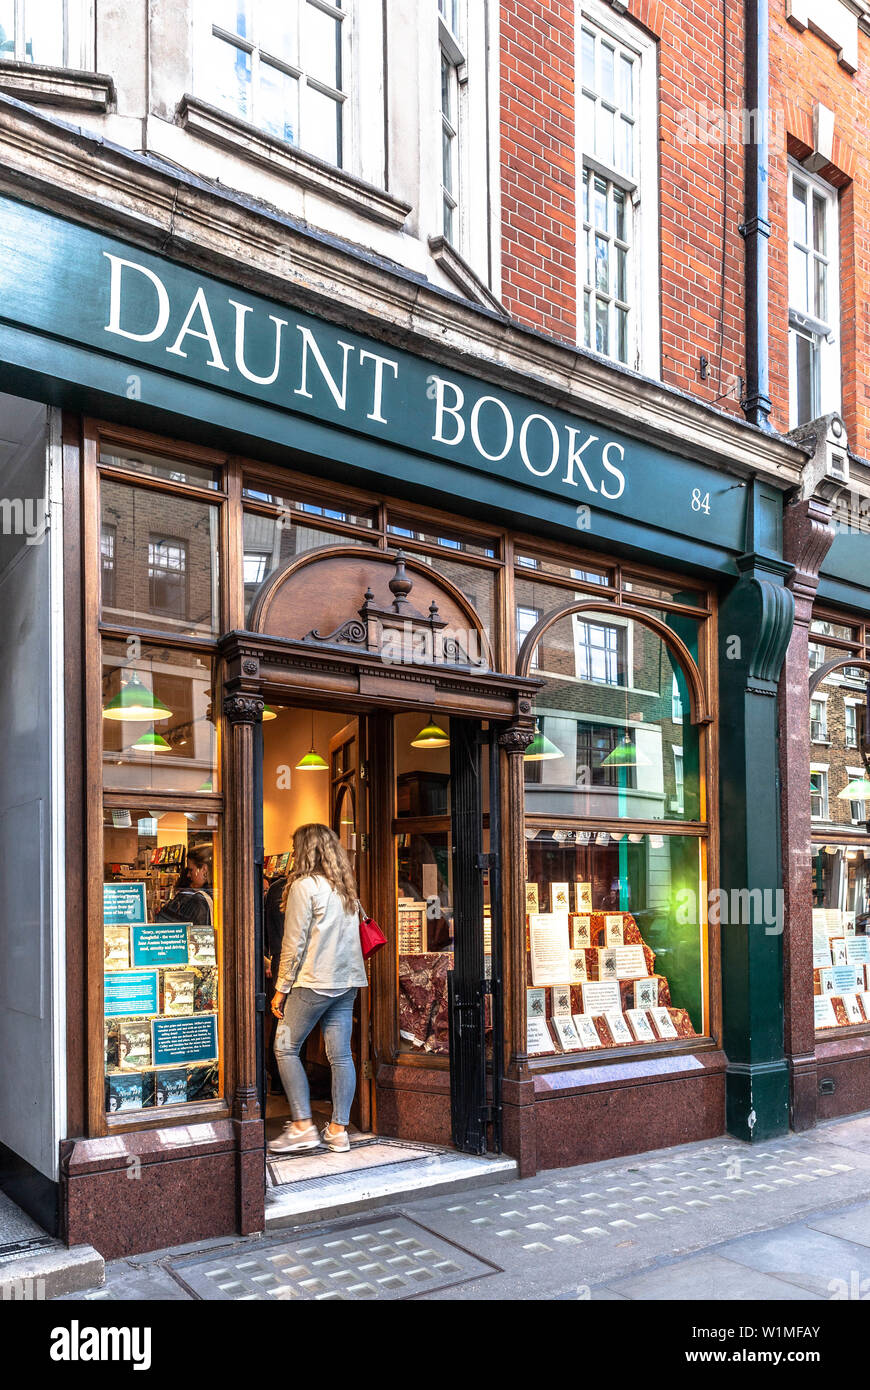 Daunt Books interior, Marylebone High Street, London W1U, England, UK. Stock Photo